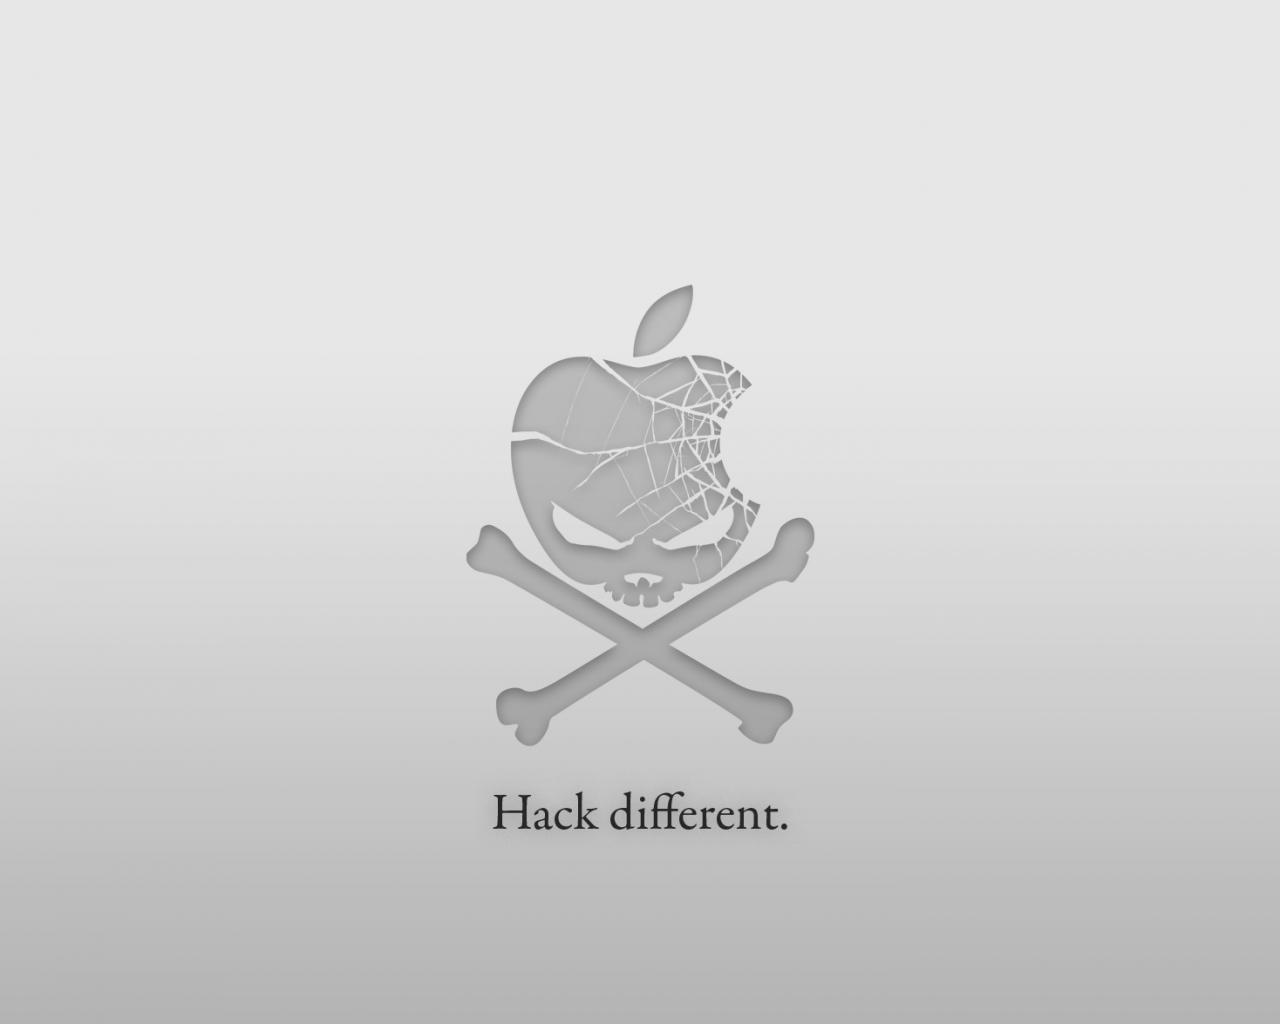 General 1280x1024 hackers Anonymous (hacker group) skull and bones Apple Inc.